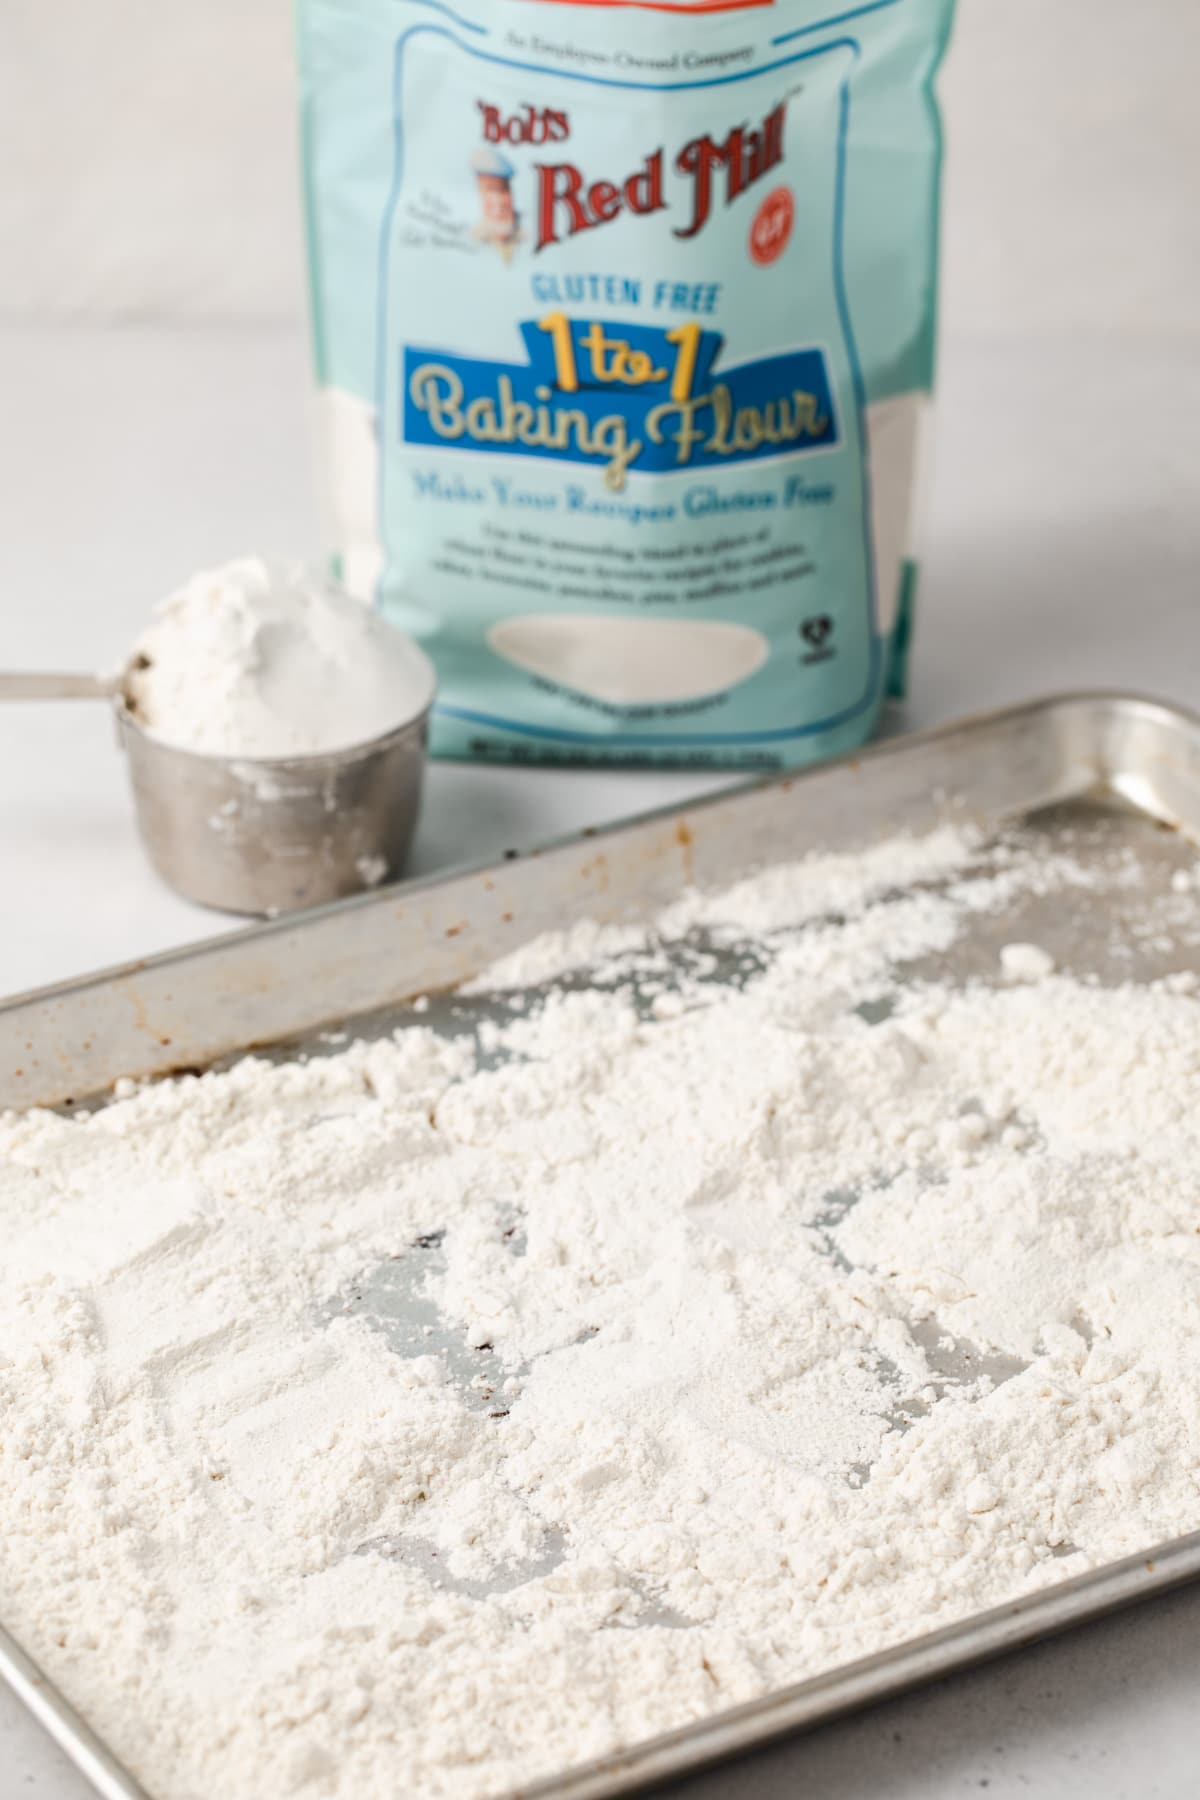 Bob's Red Mill Gluten-Free 1-to-1 Baking Flour spread on baking sheet